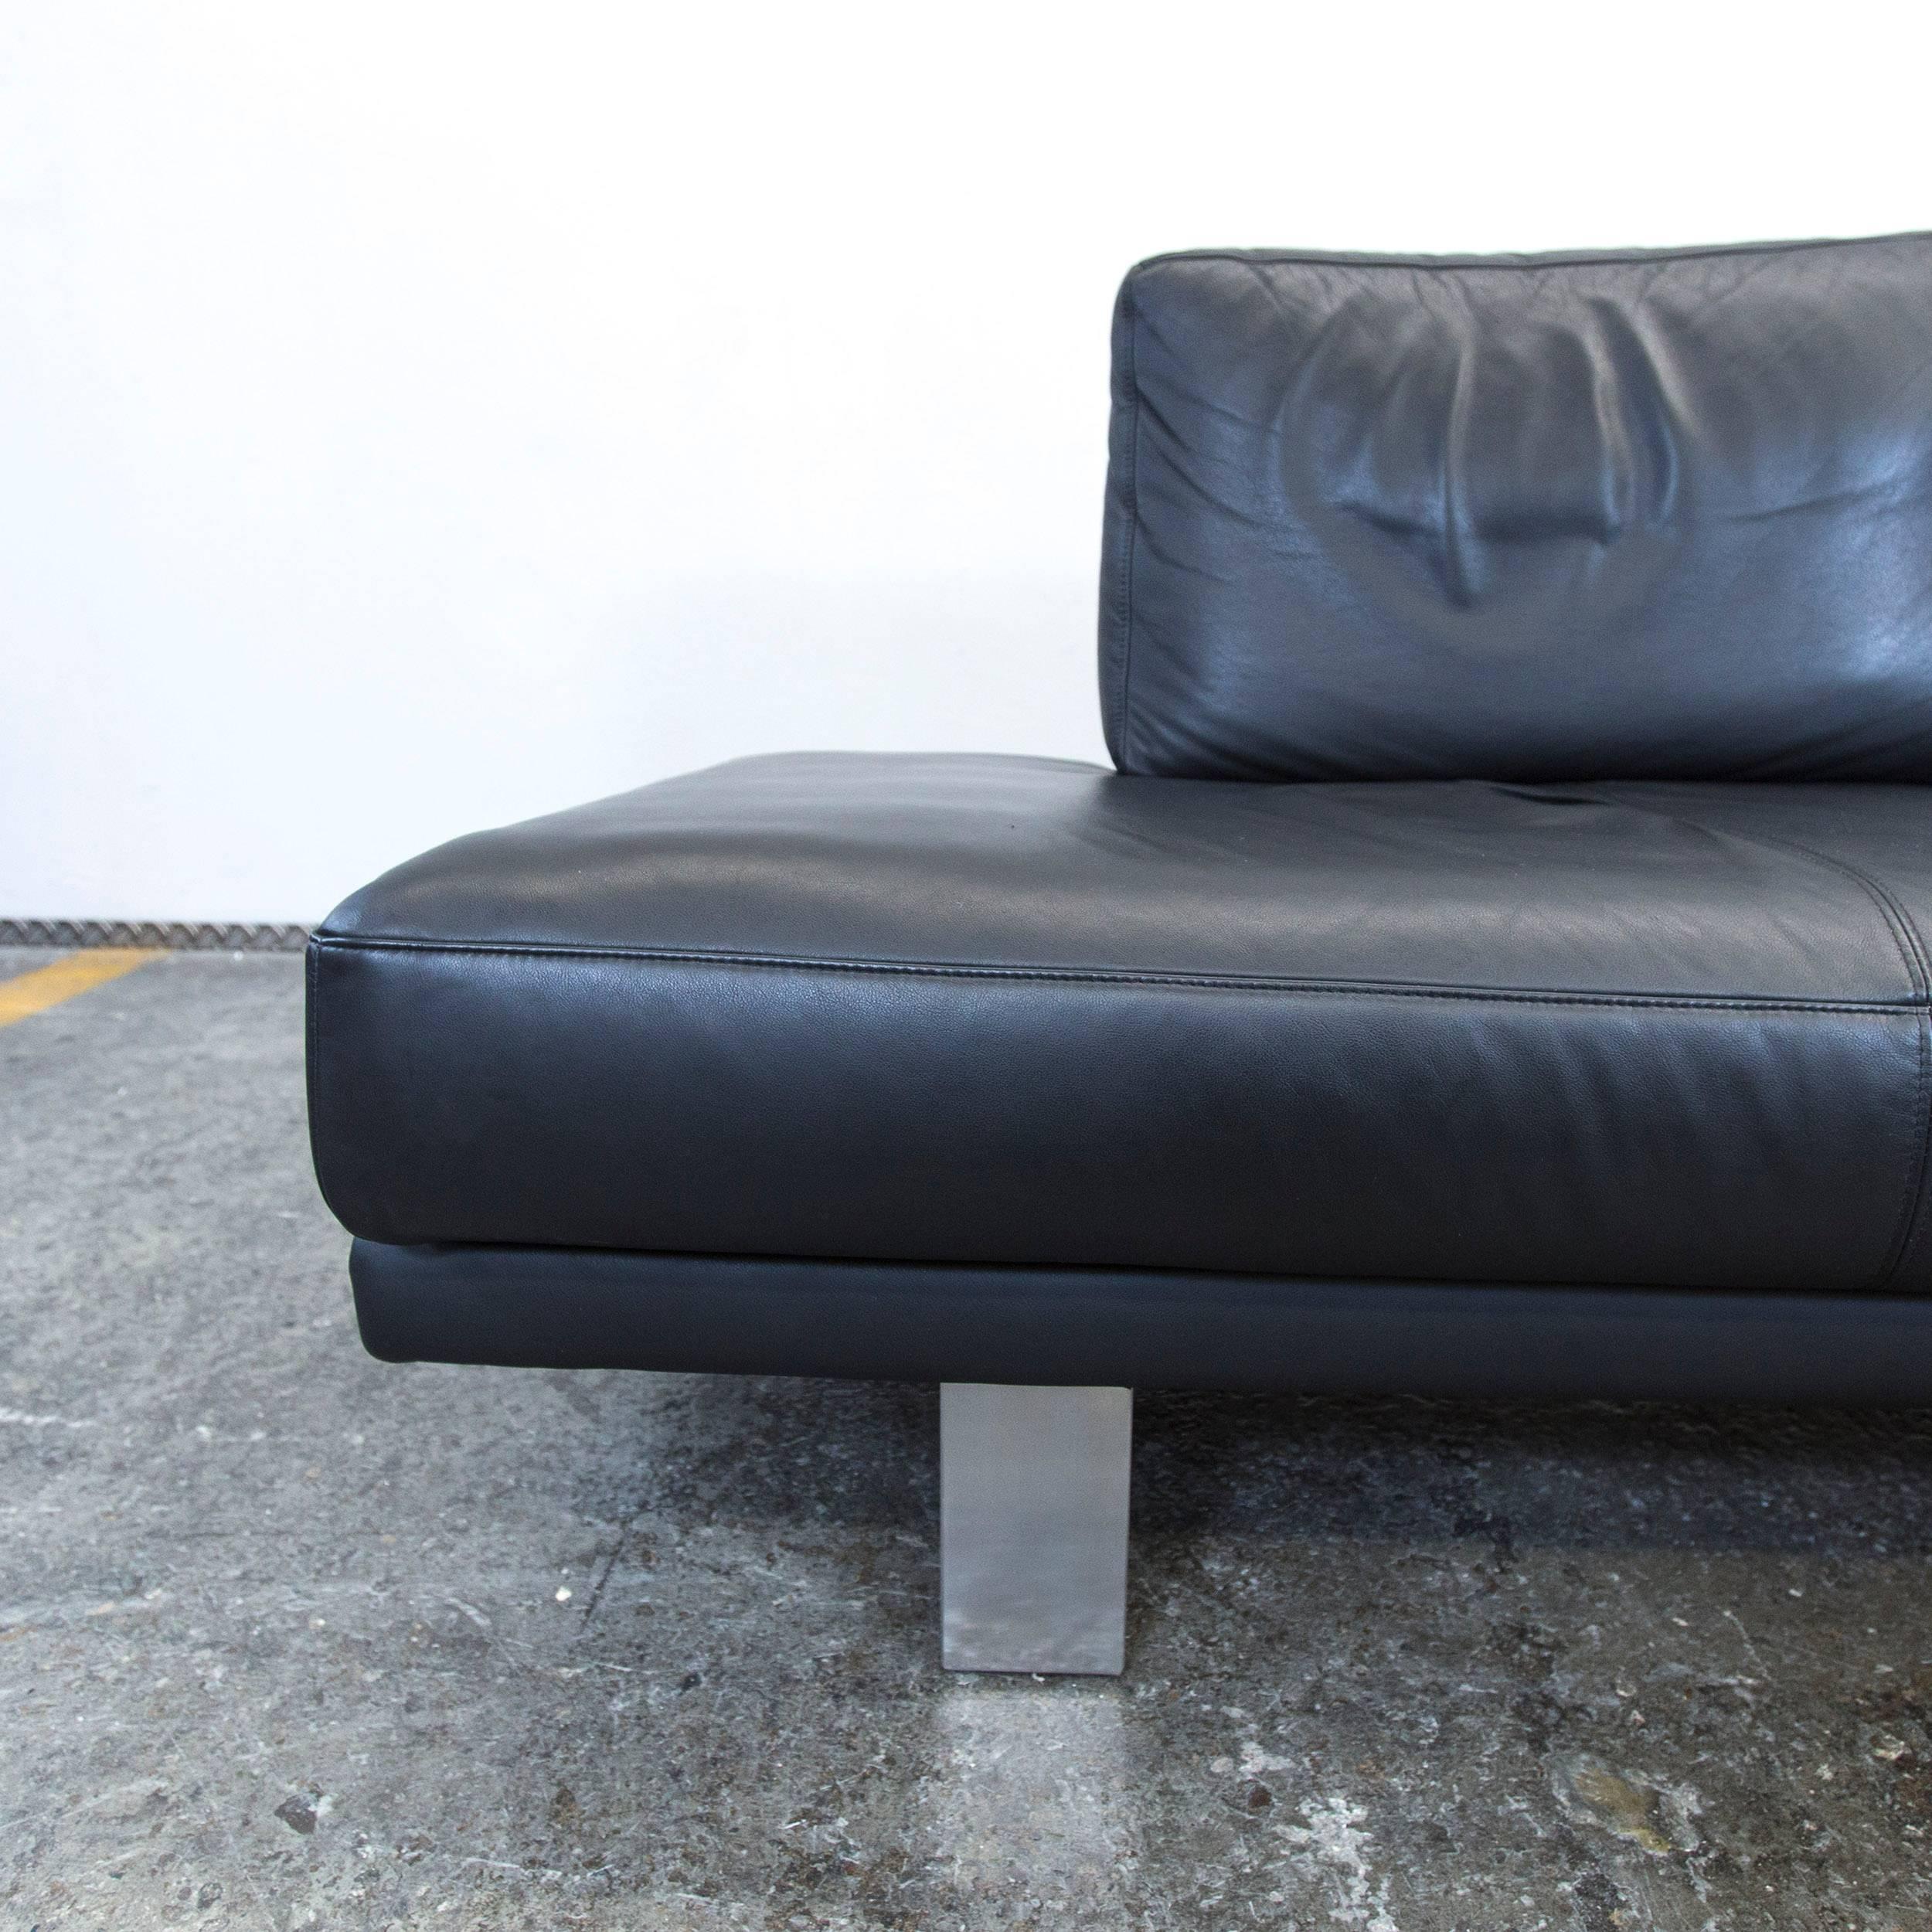 German Rolf Benz Sob 6600 Designer Leather Sofa Black Three-Seat Couch Modern For Sale